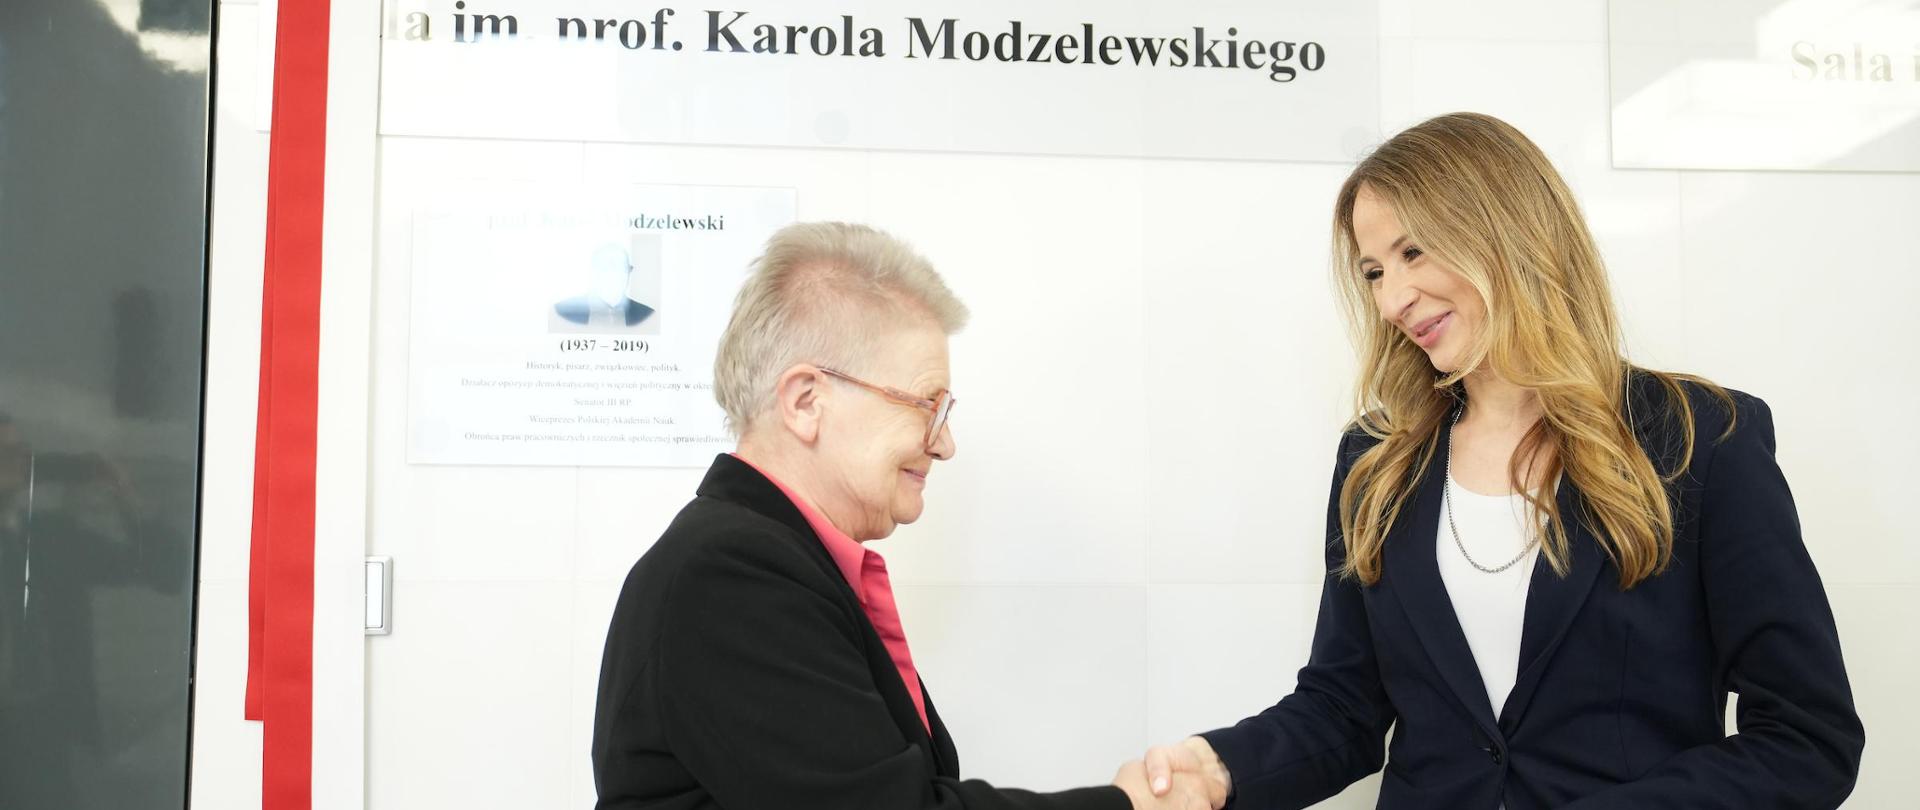 Prof. Karol Modzelewski i Halina Krahelska uhonorowani w MRPiPS